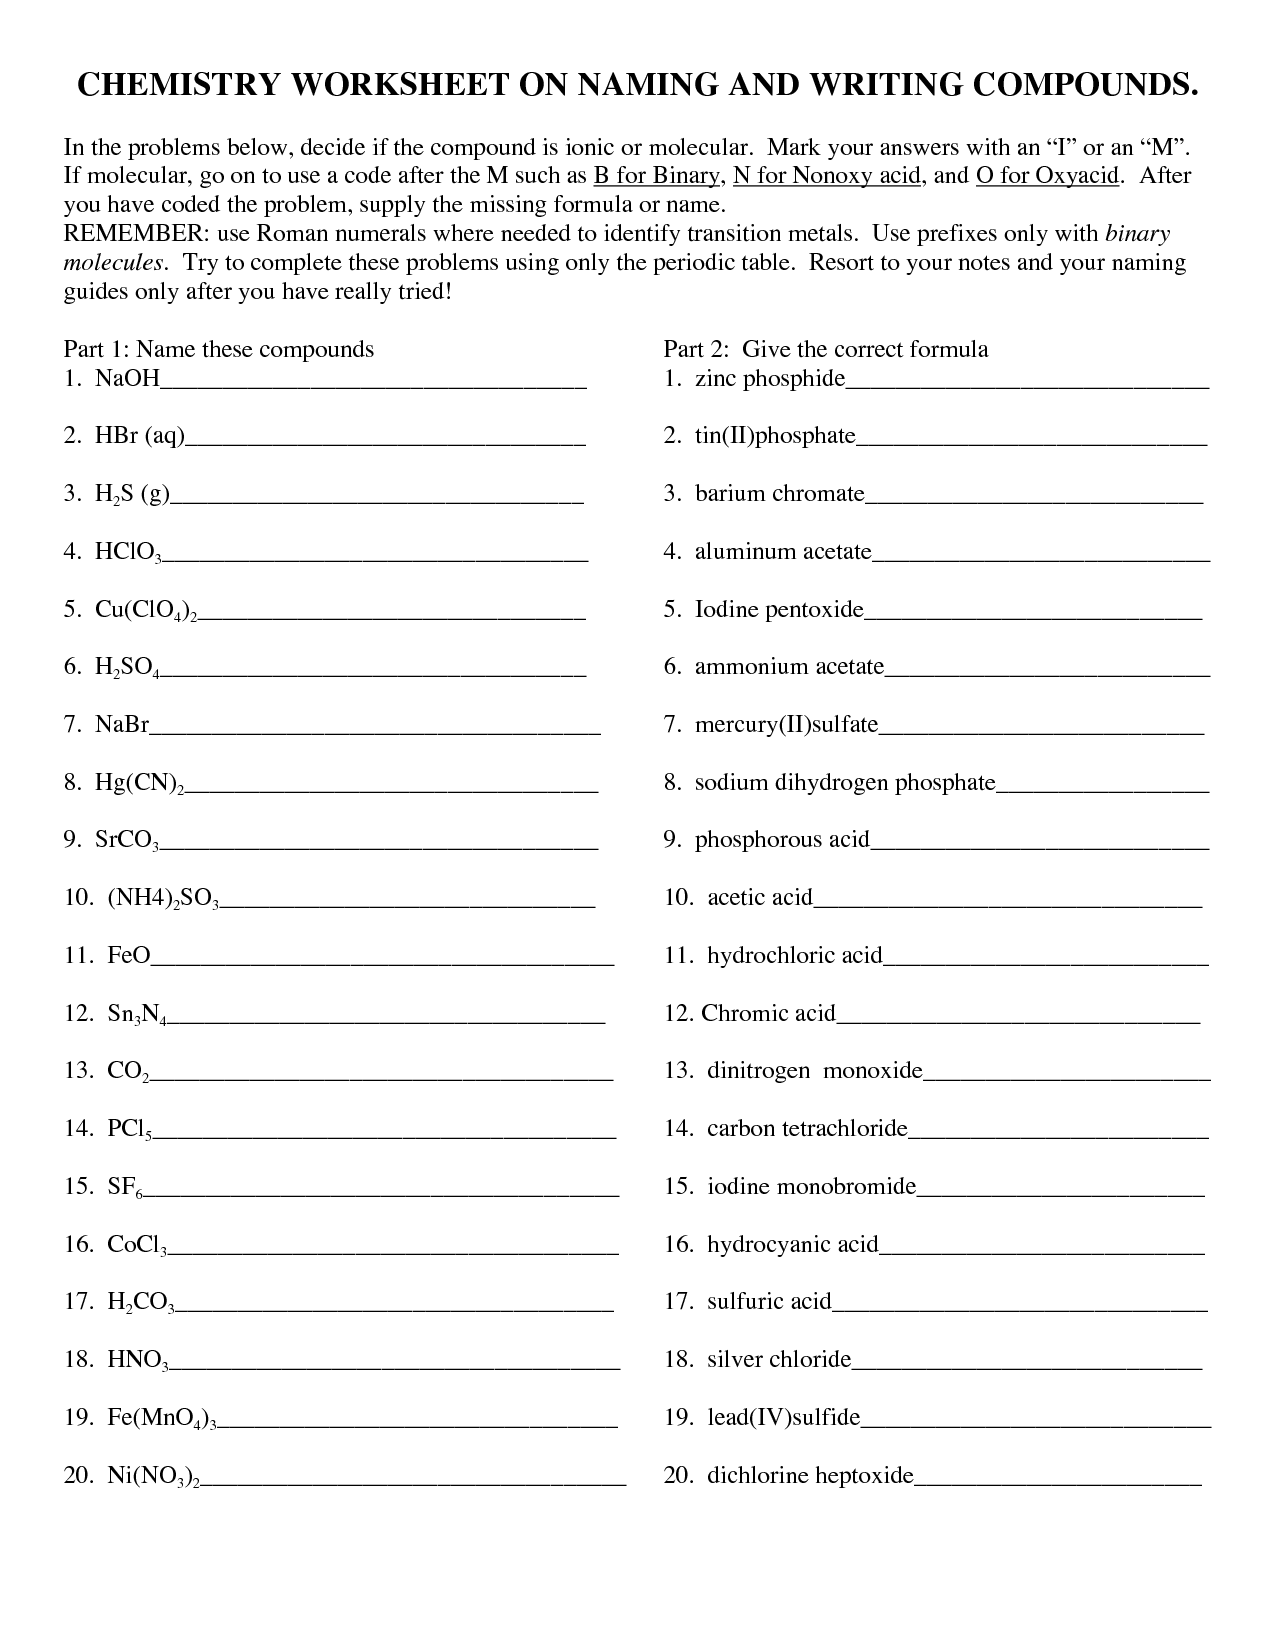 Chemistry Nomenclature Worksheet Answers